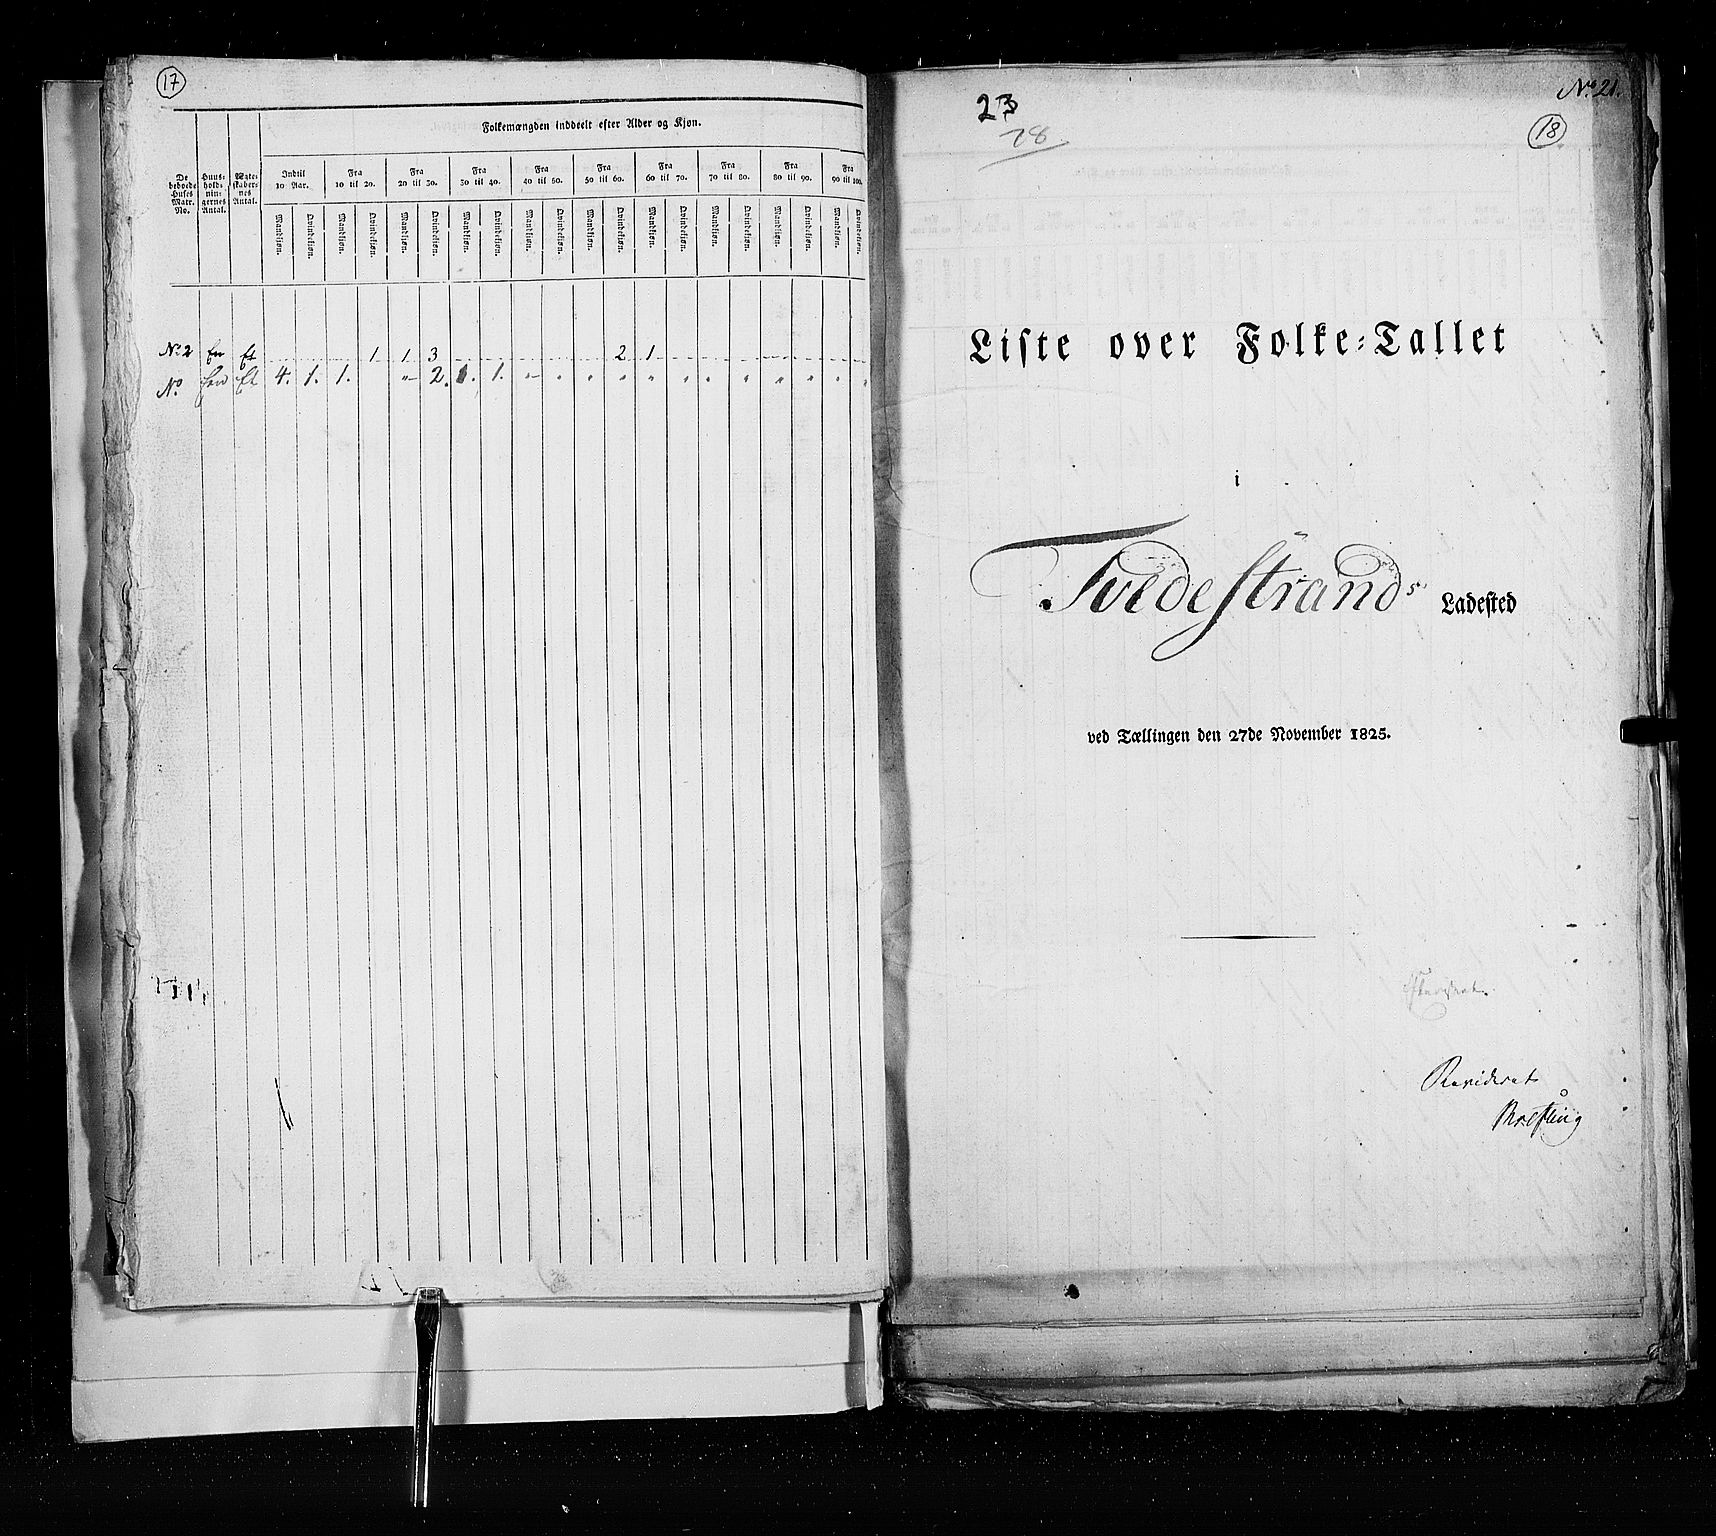 RA, Census 1825, vol. 21: Risør-Vardø, 1825, p. 17-18